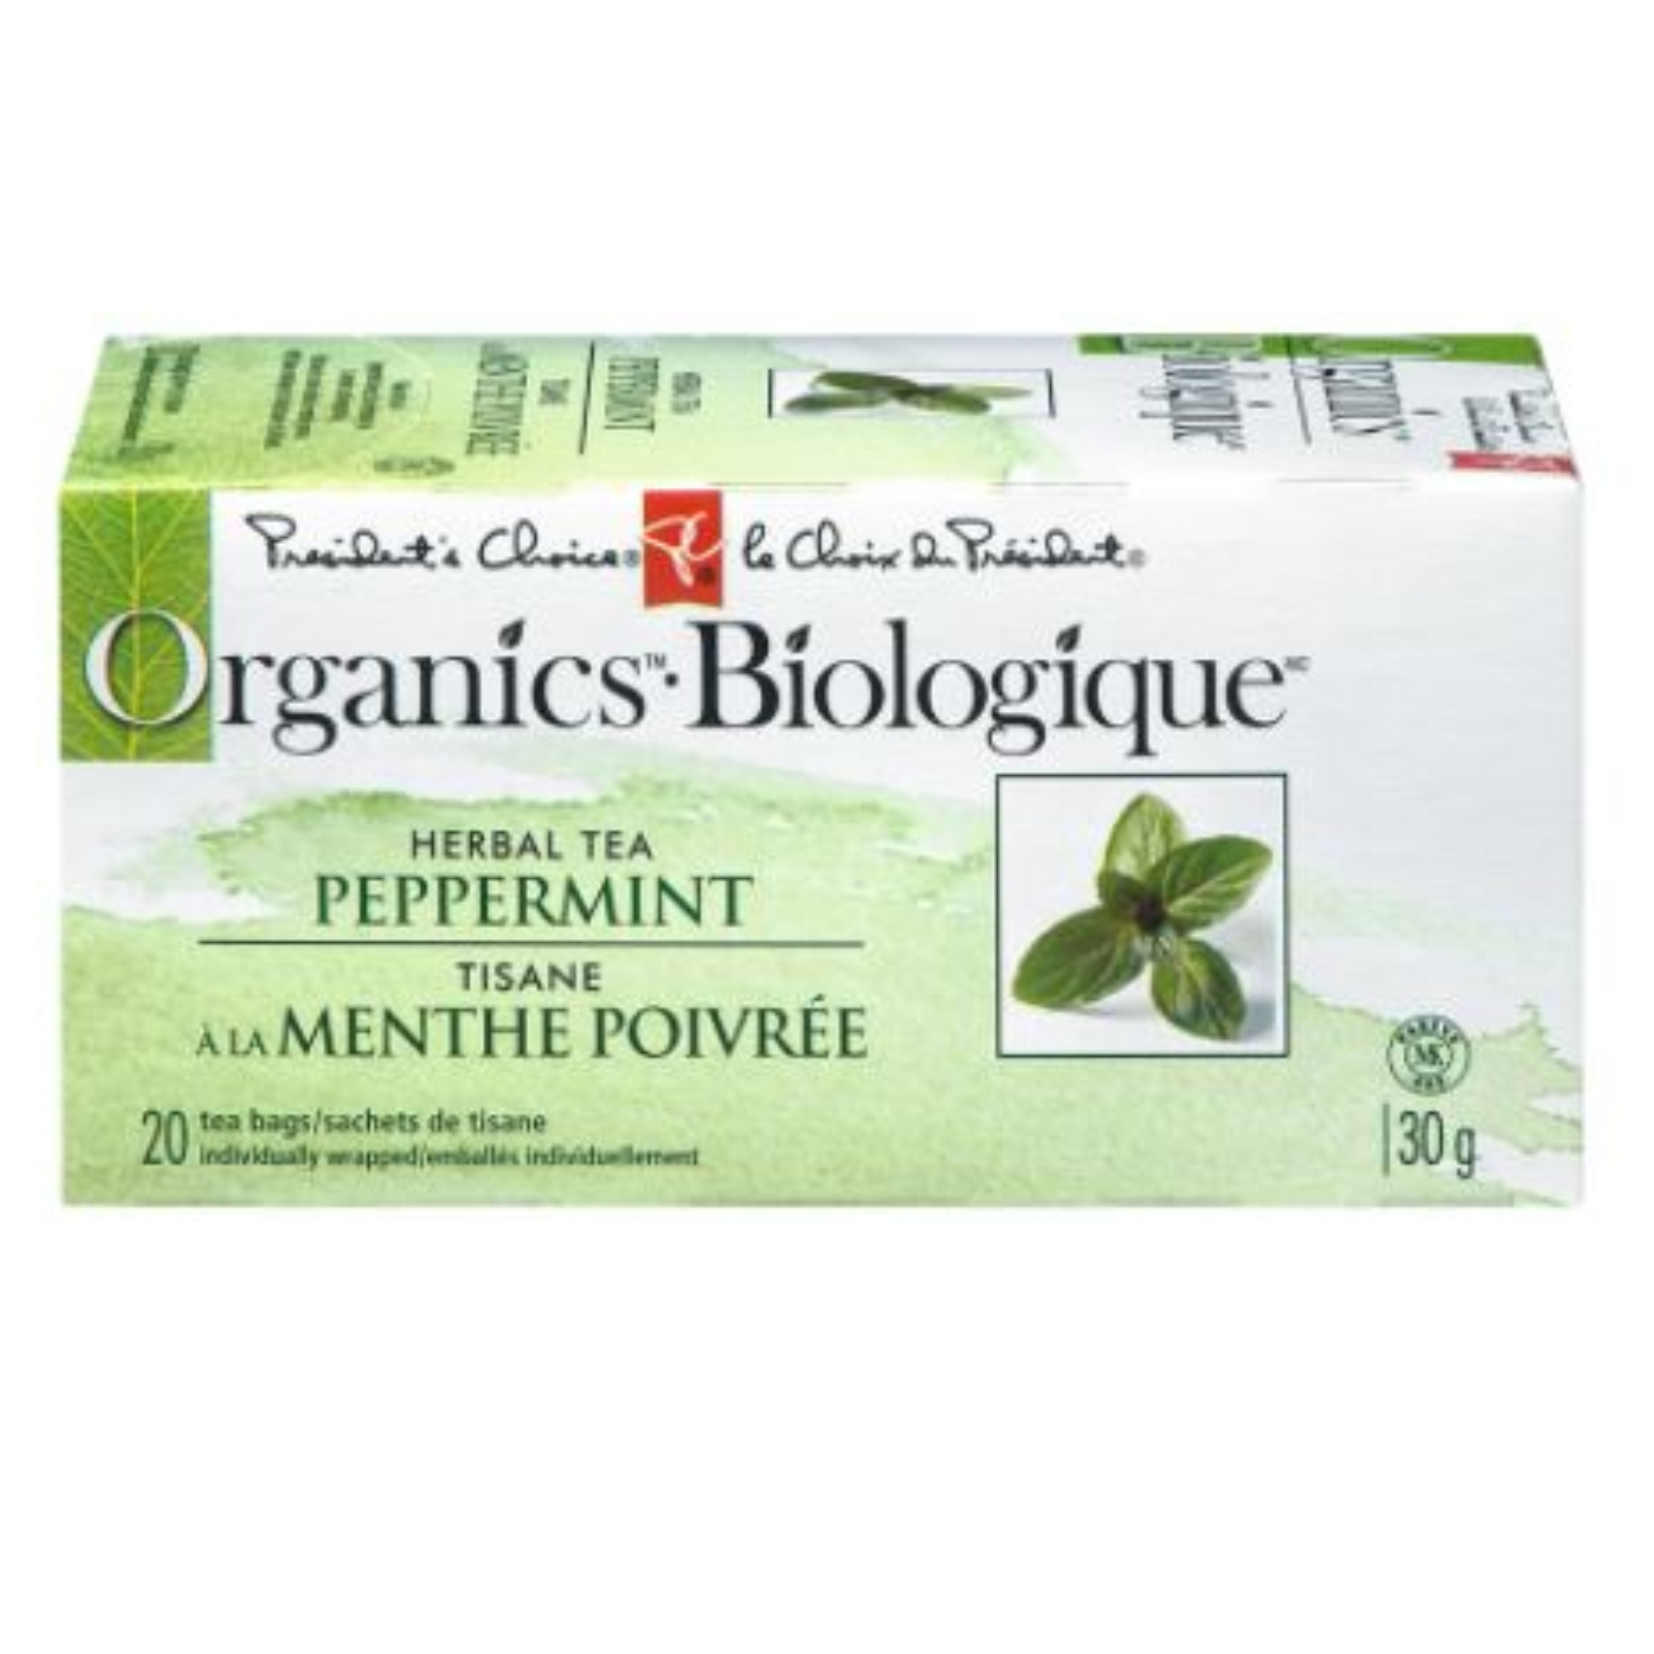 President's Choice Organics Peppermint Herbal Tea 30g